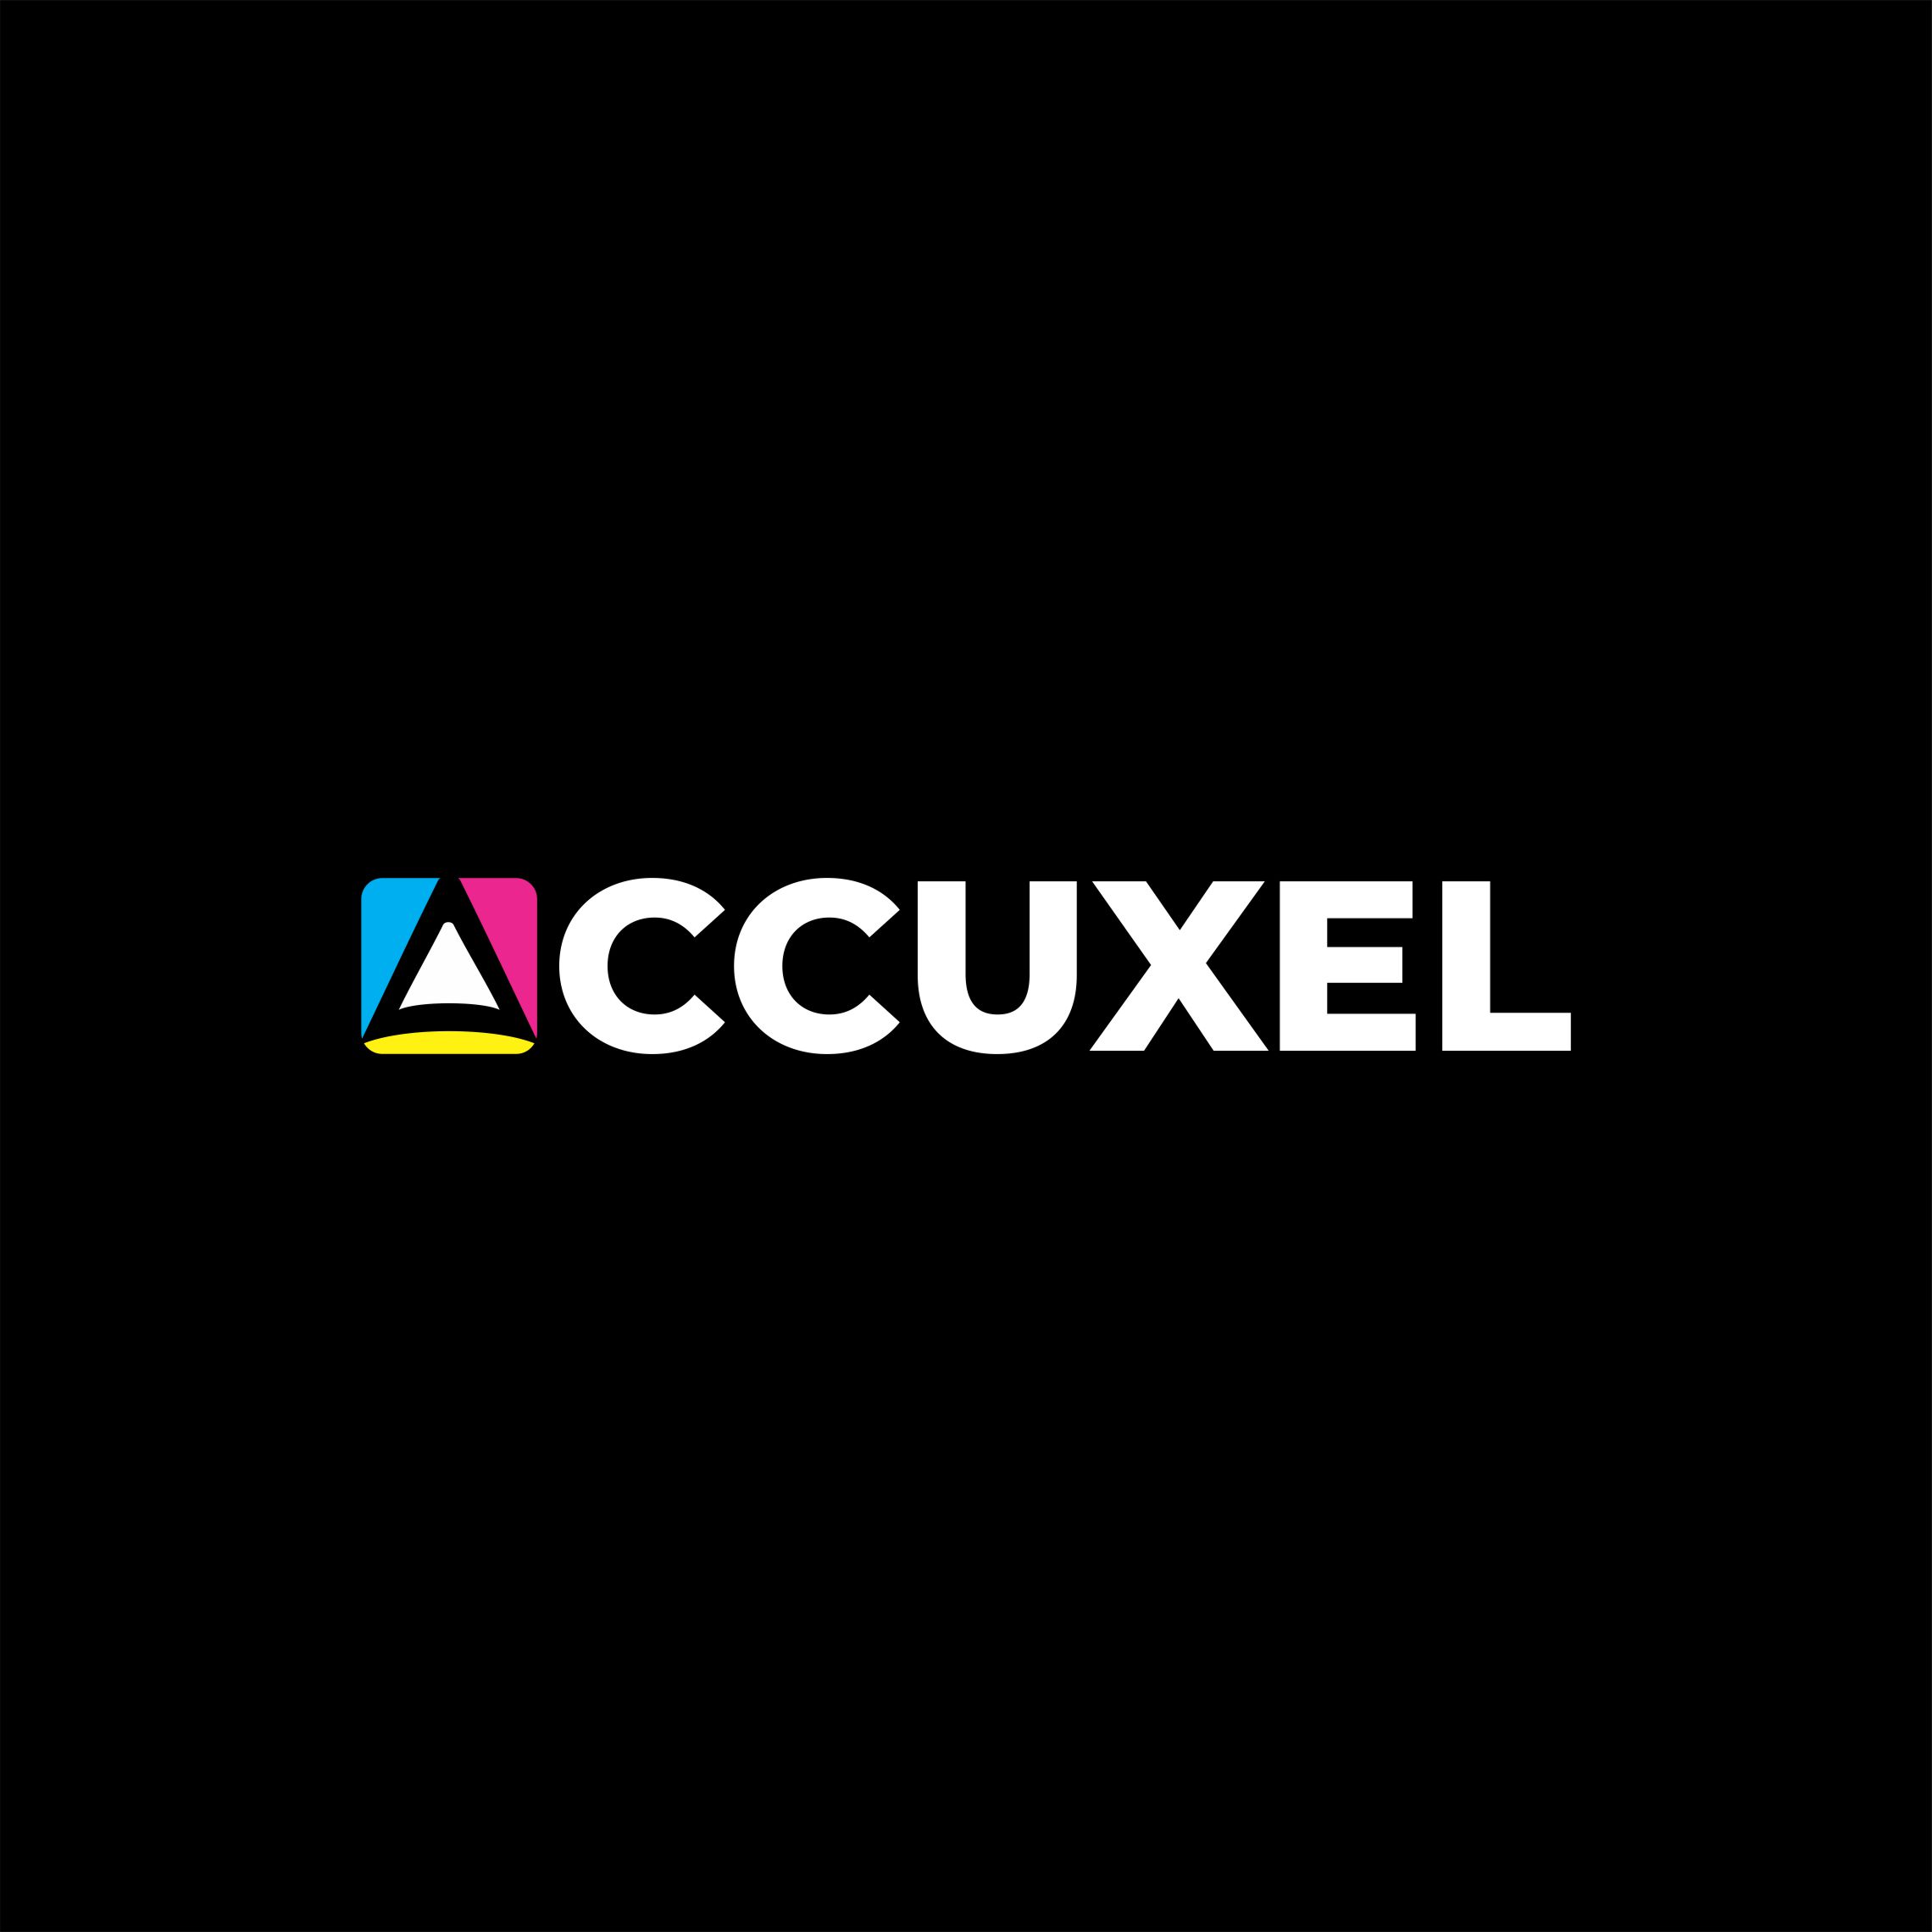 Accuxel Prints & Design provider